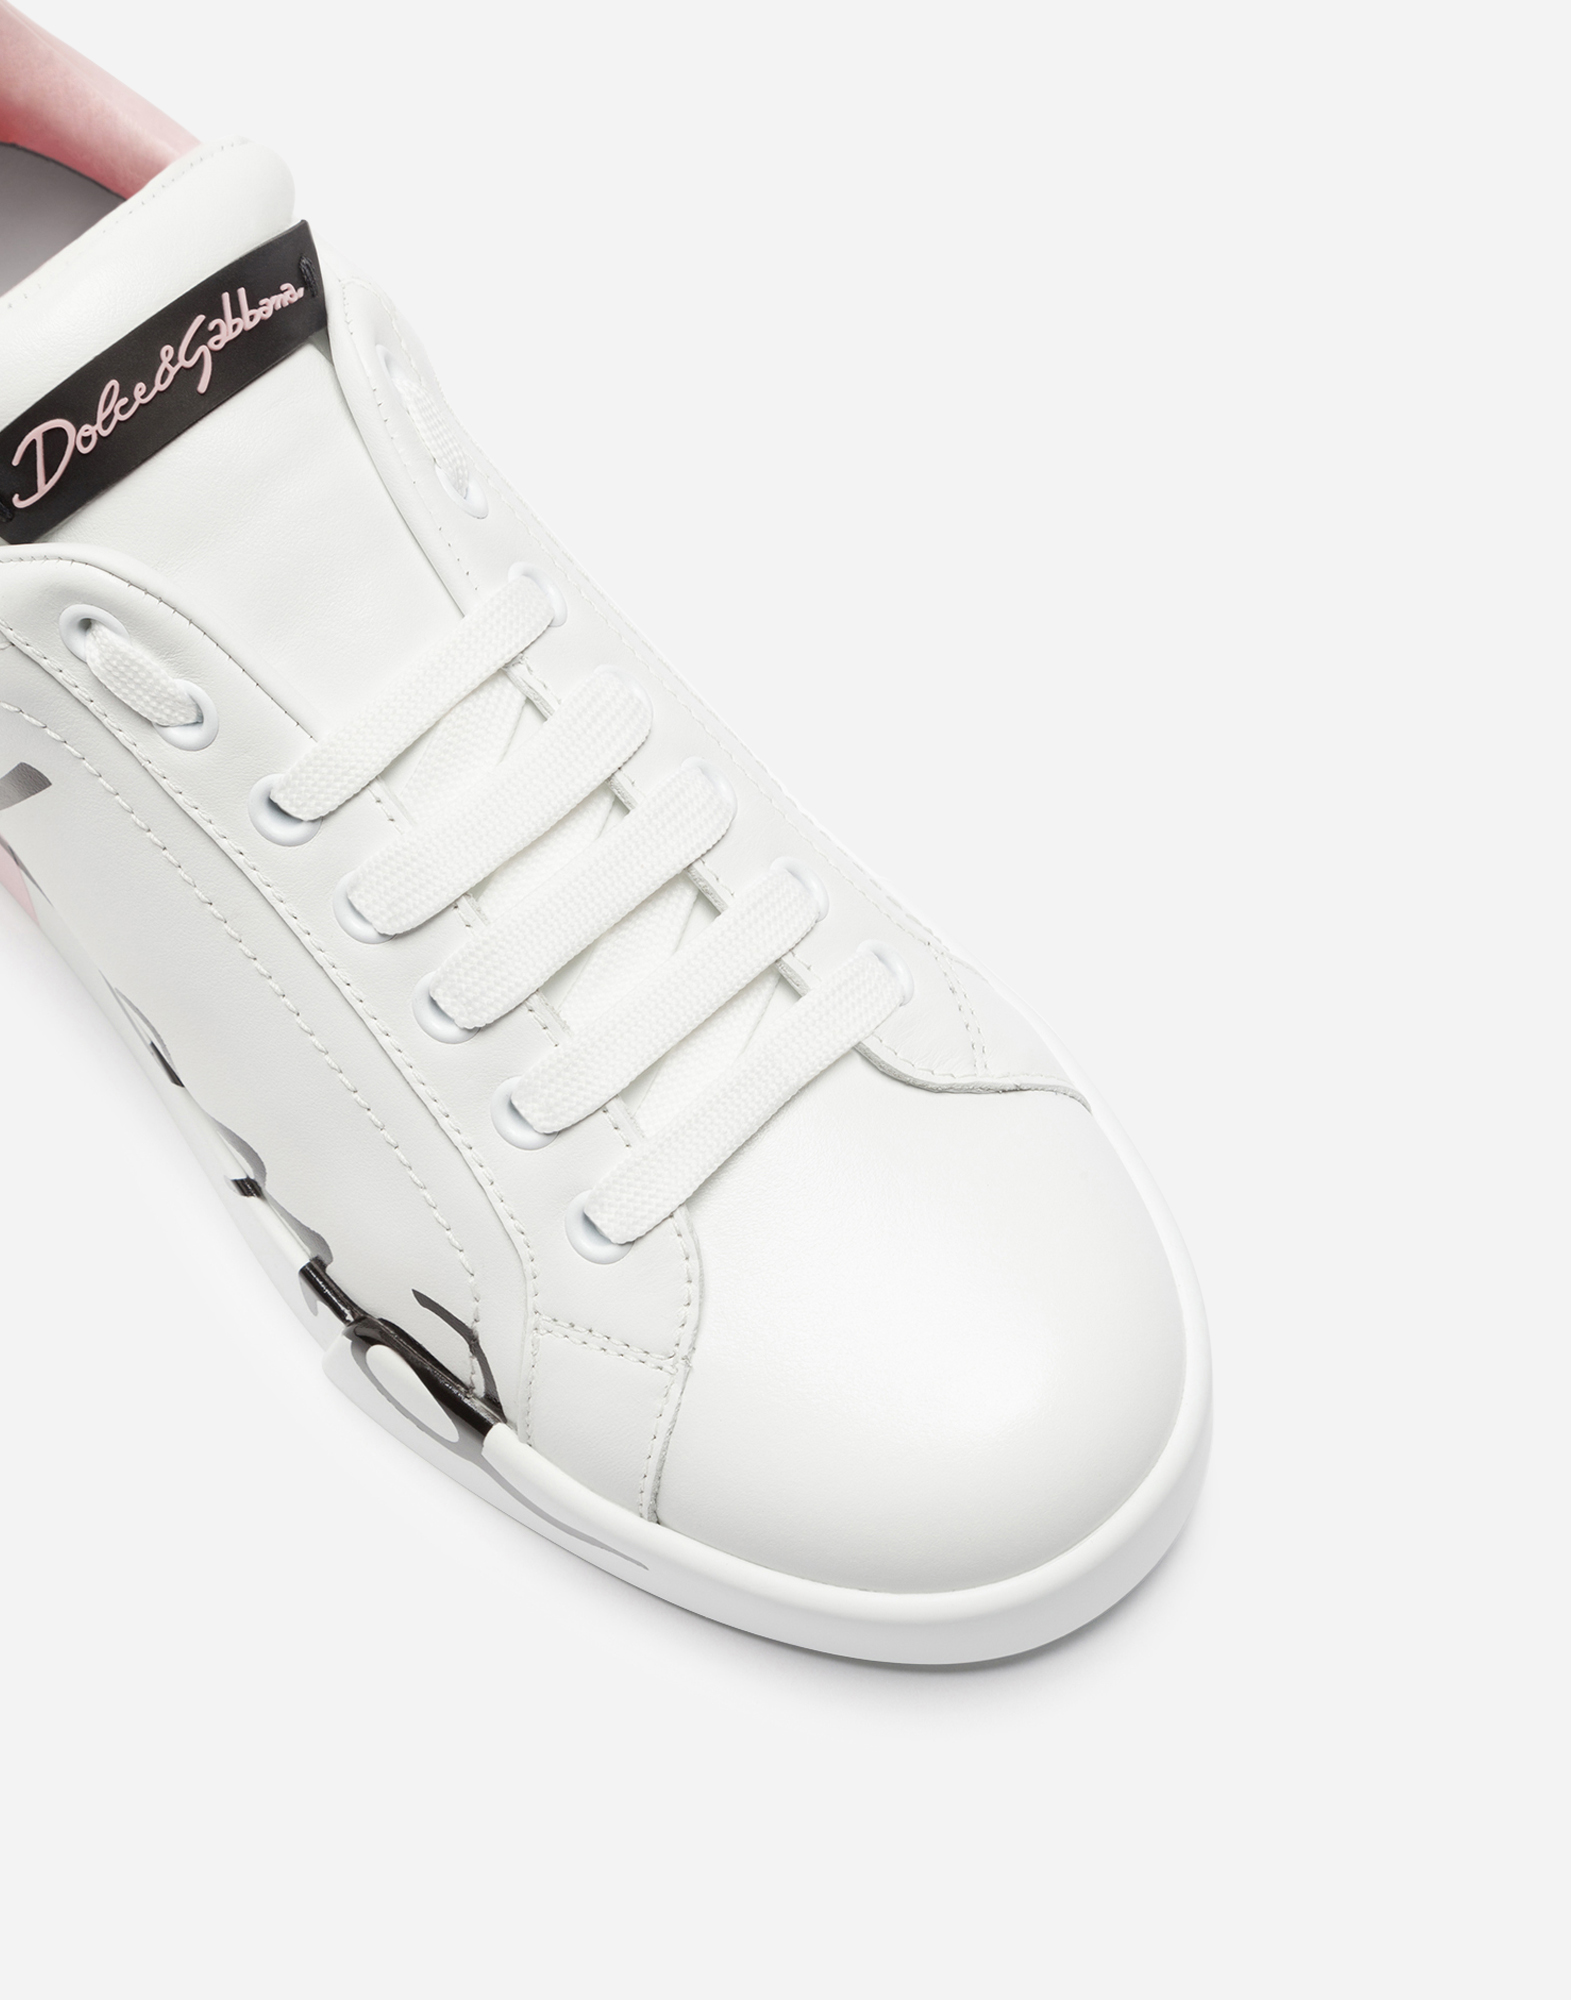 dolce gabbana white shoes